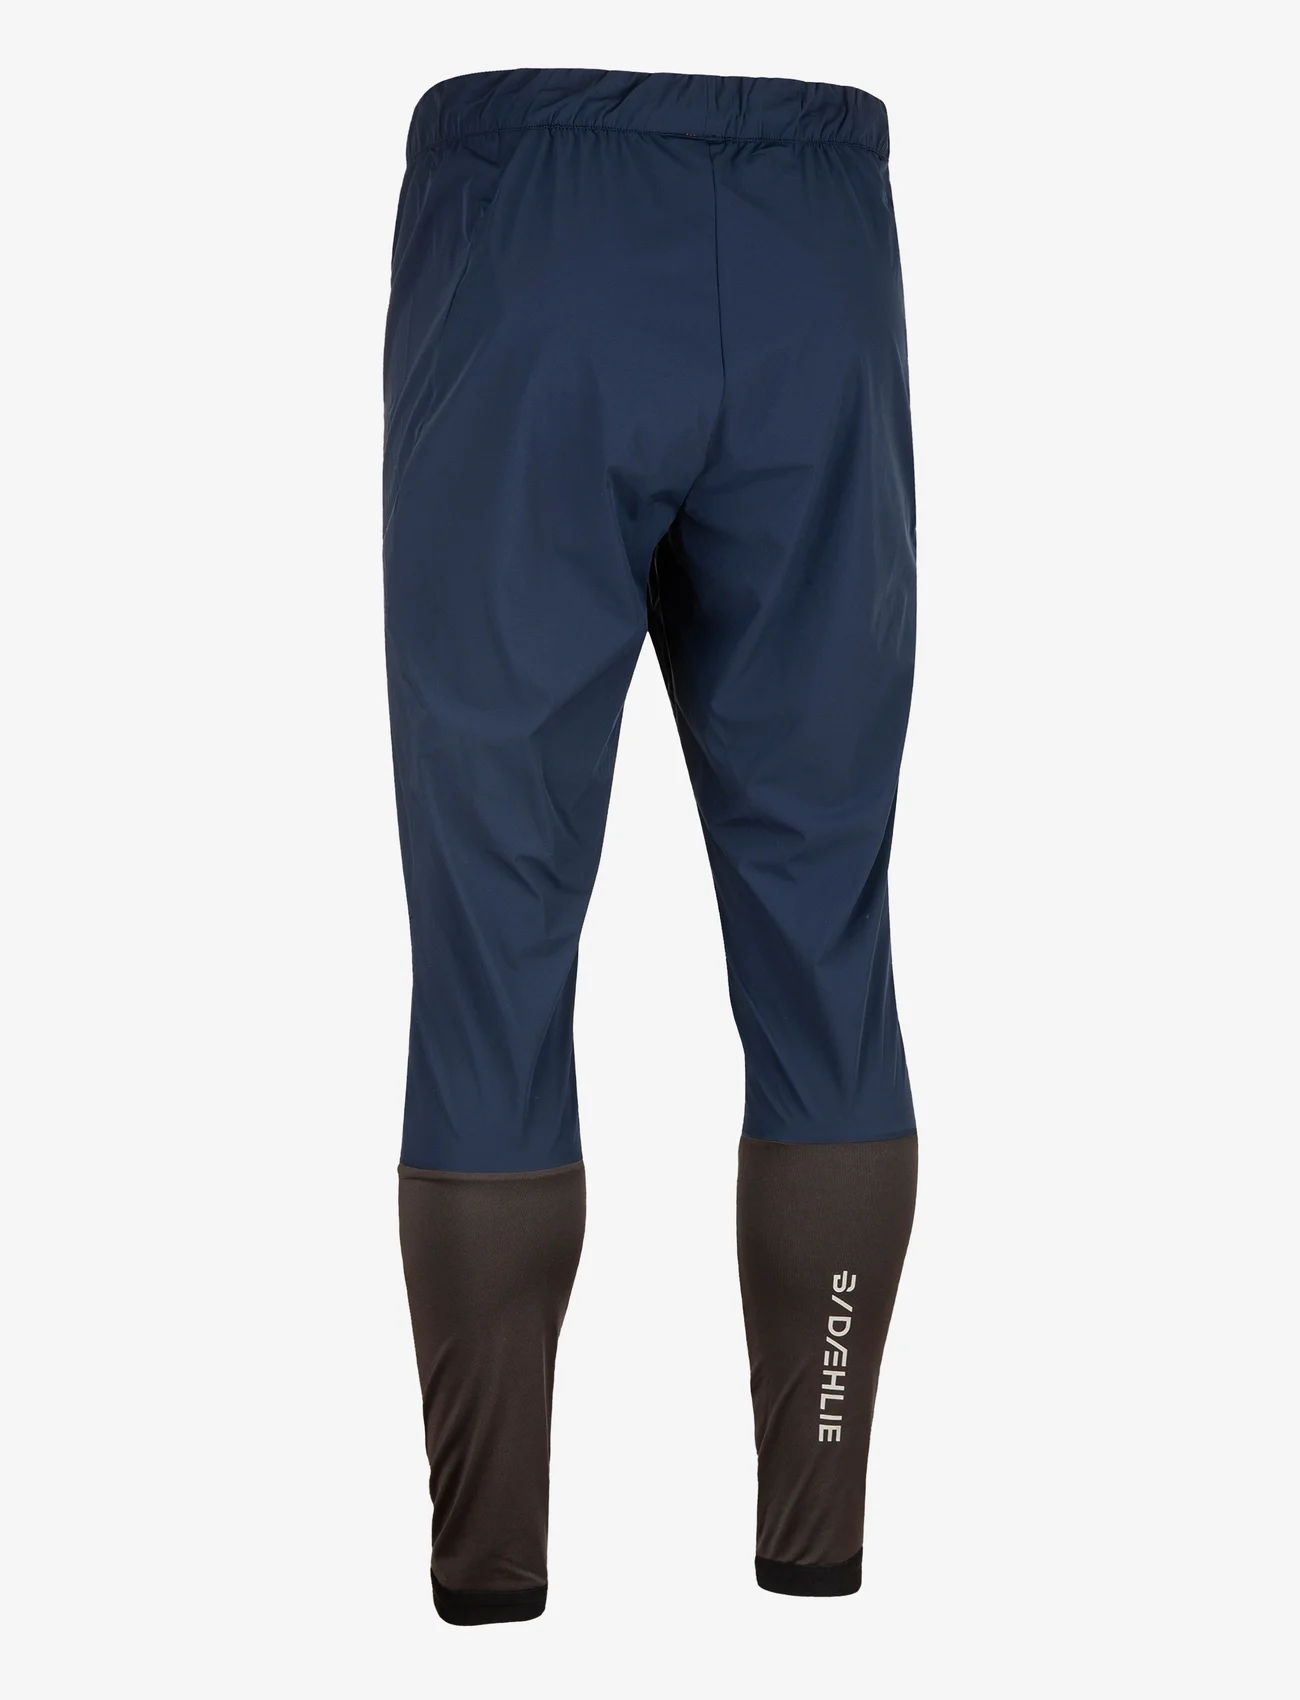 Daehlie - Pants Run - sports pants - navy - 1